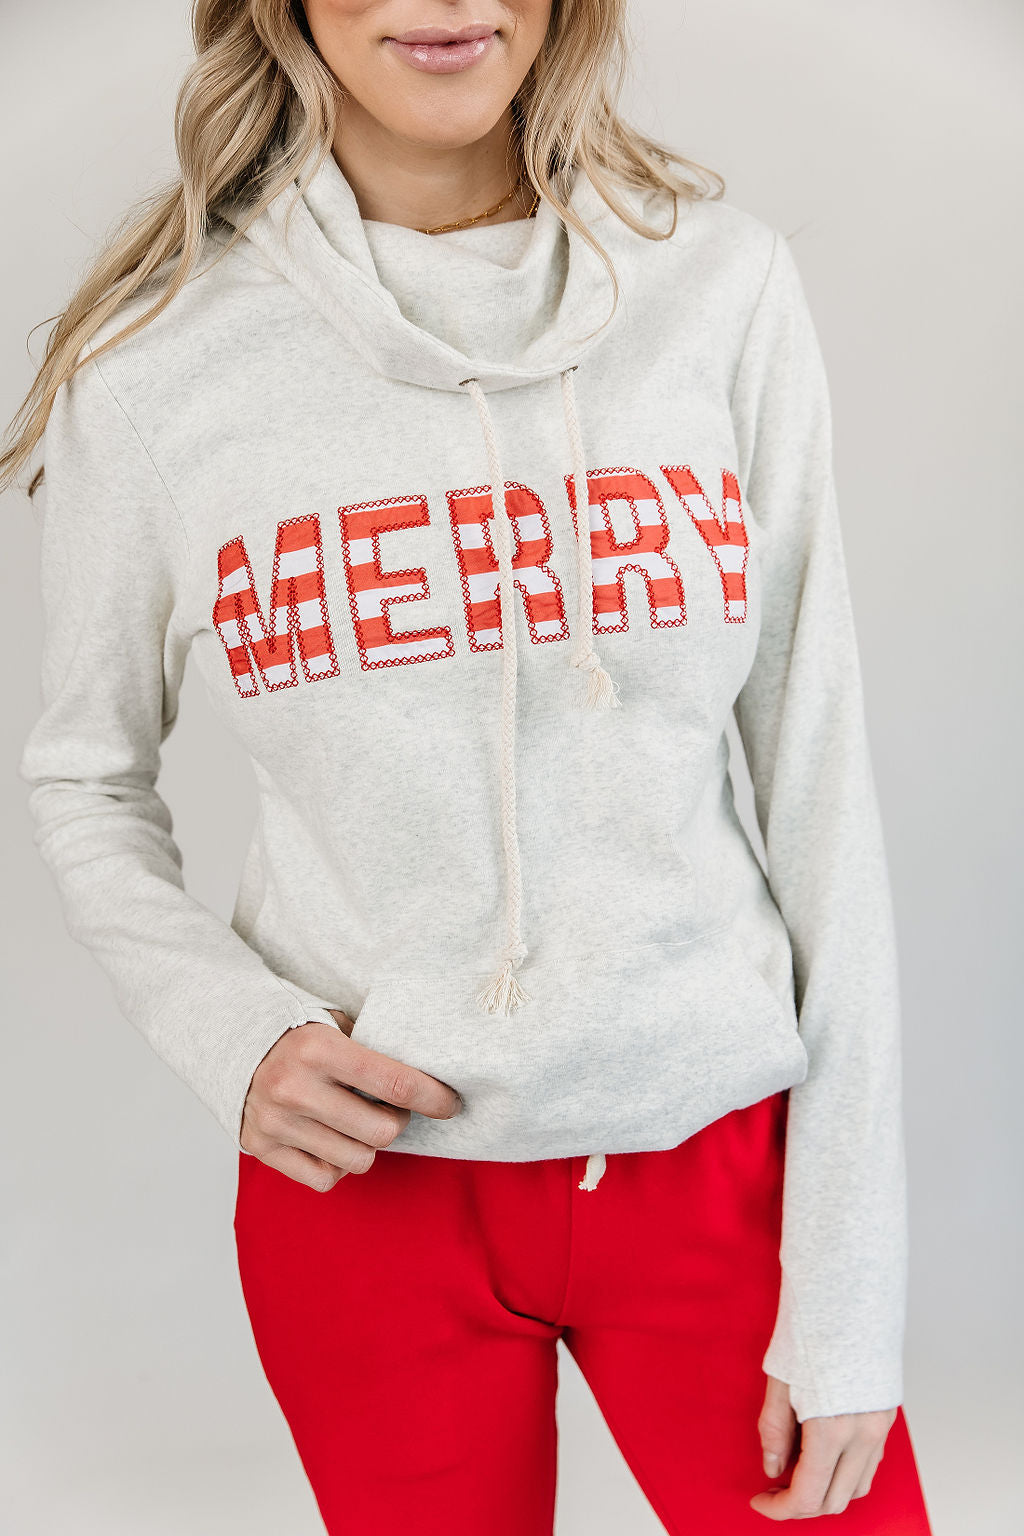 Ampersand Avenue Cowlneck Sweatshirt - Merry